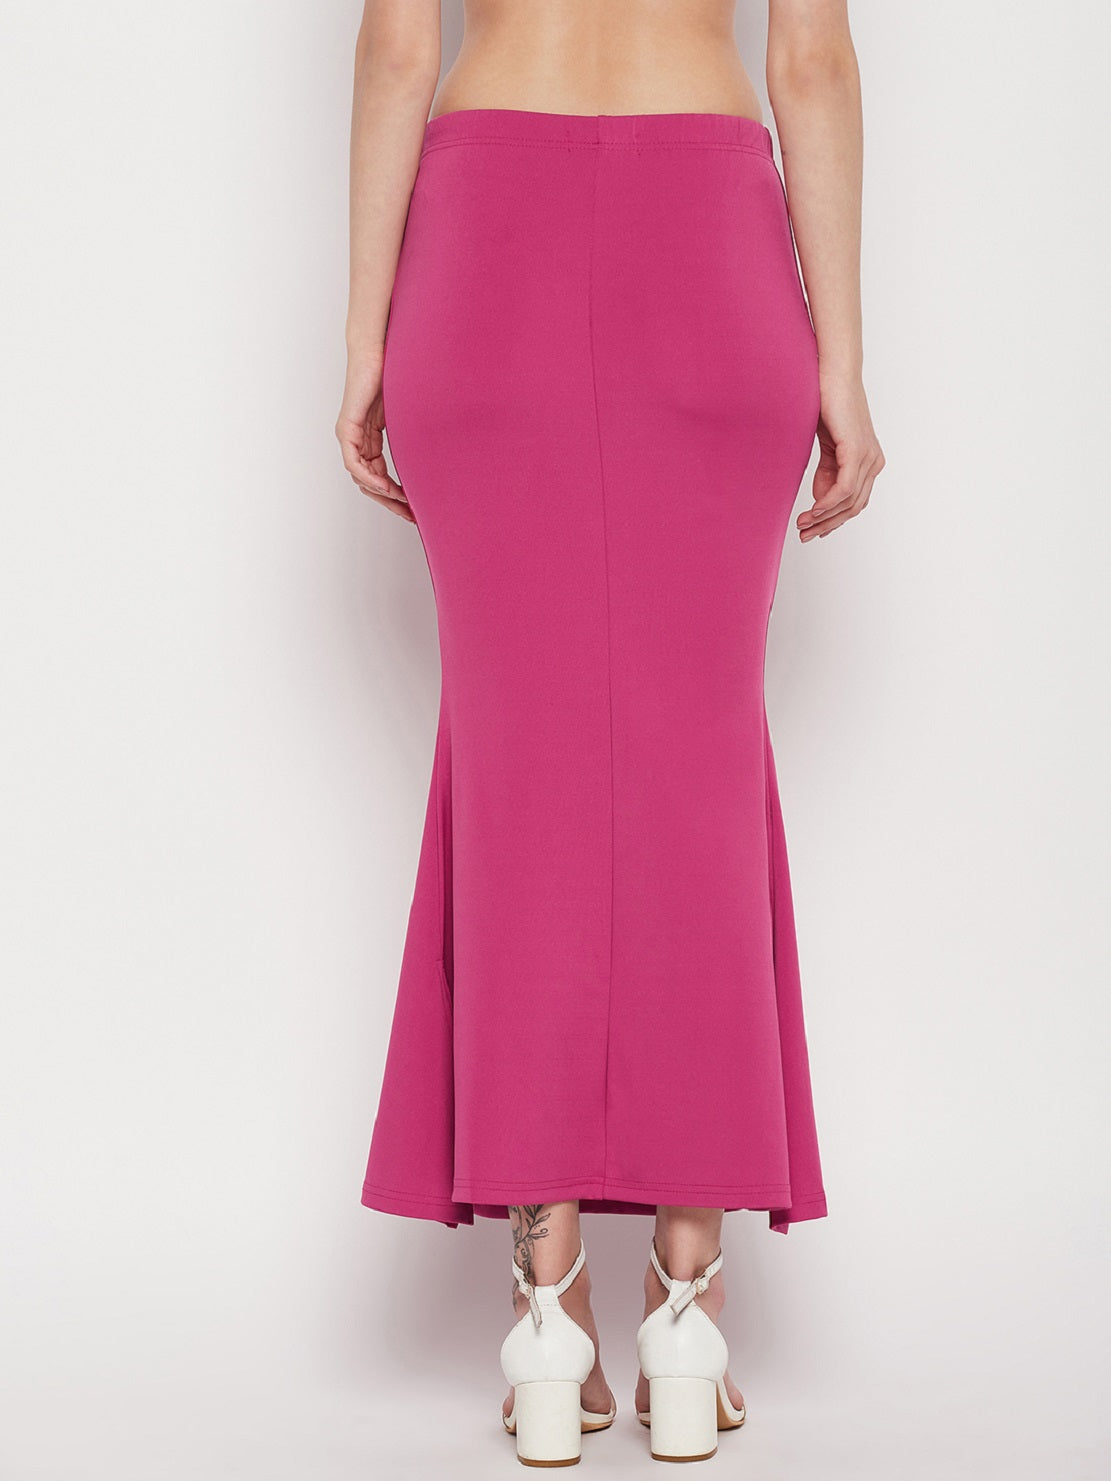 CRAFTSTRIBE Saree Petticoat Baby Pink Inskirt Underskirt Pure